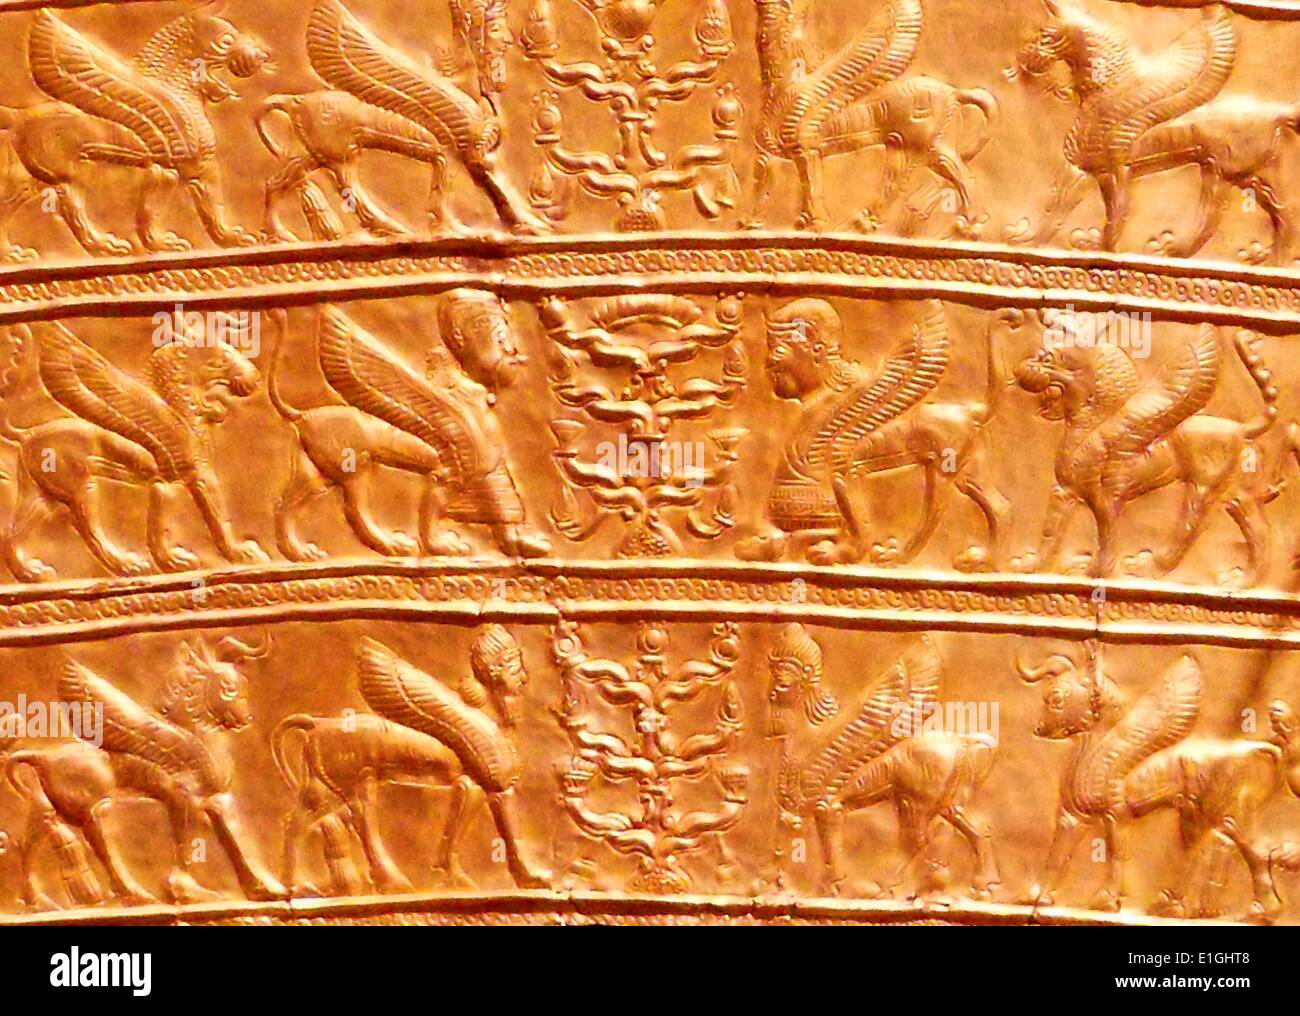 Placas con criaturas aladas acercando árboles estilizados. Oro, del noroeste de Irán, 8ª-7ª siglo A.C. Foto de stock